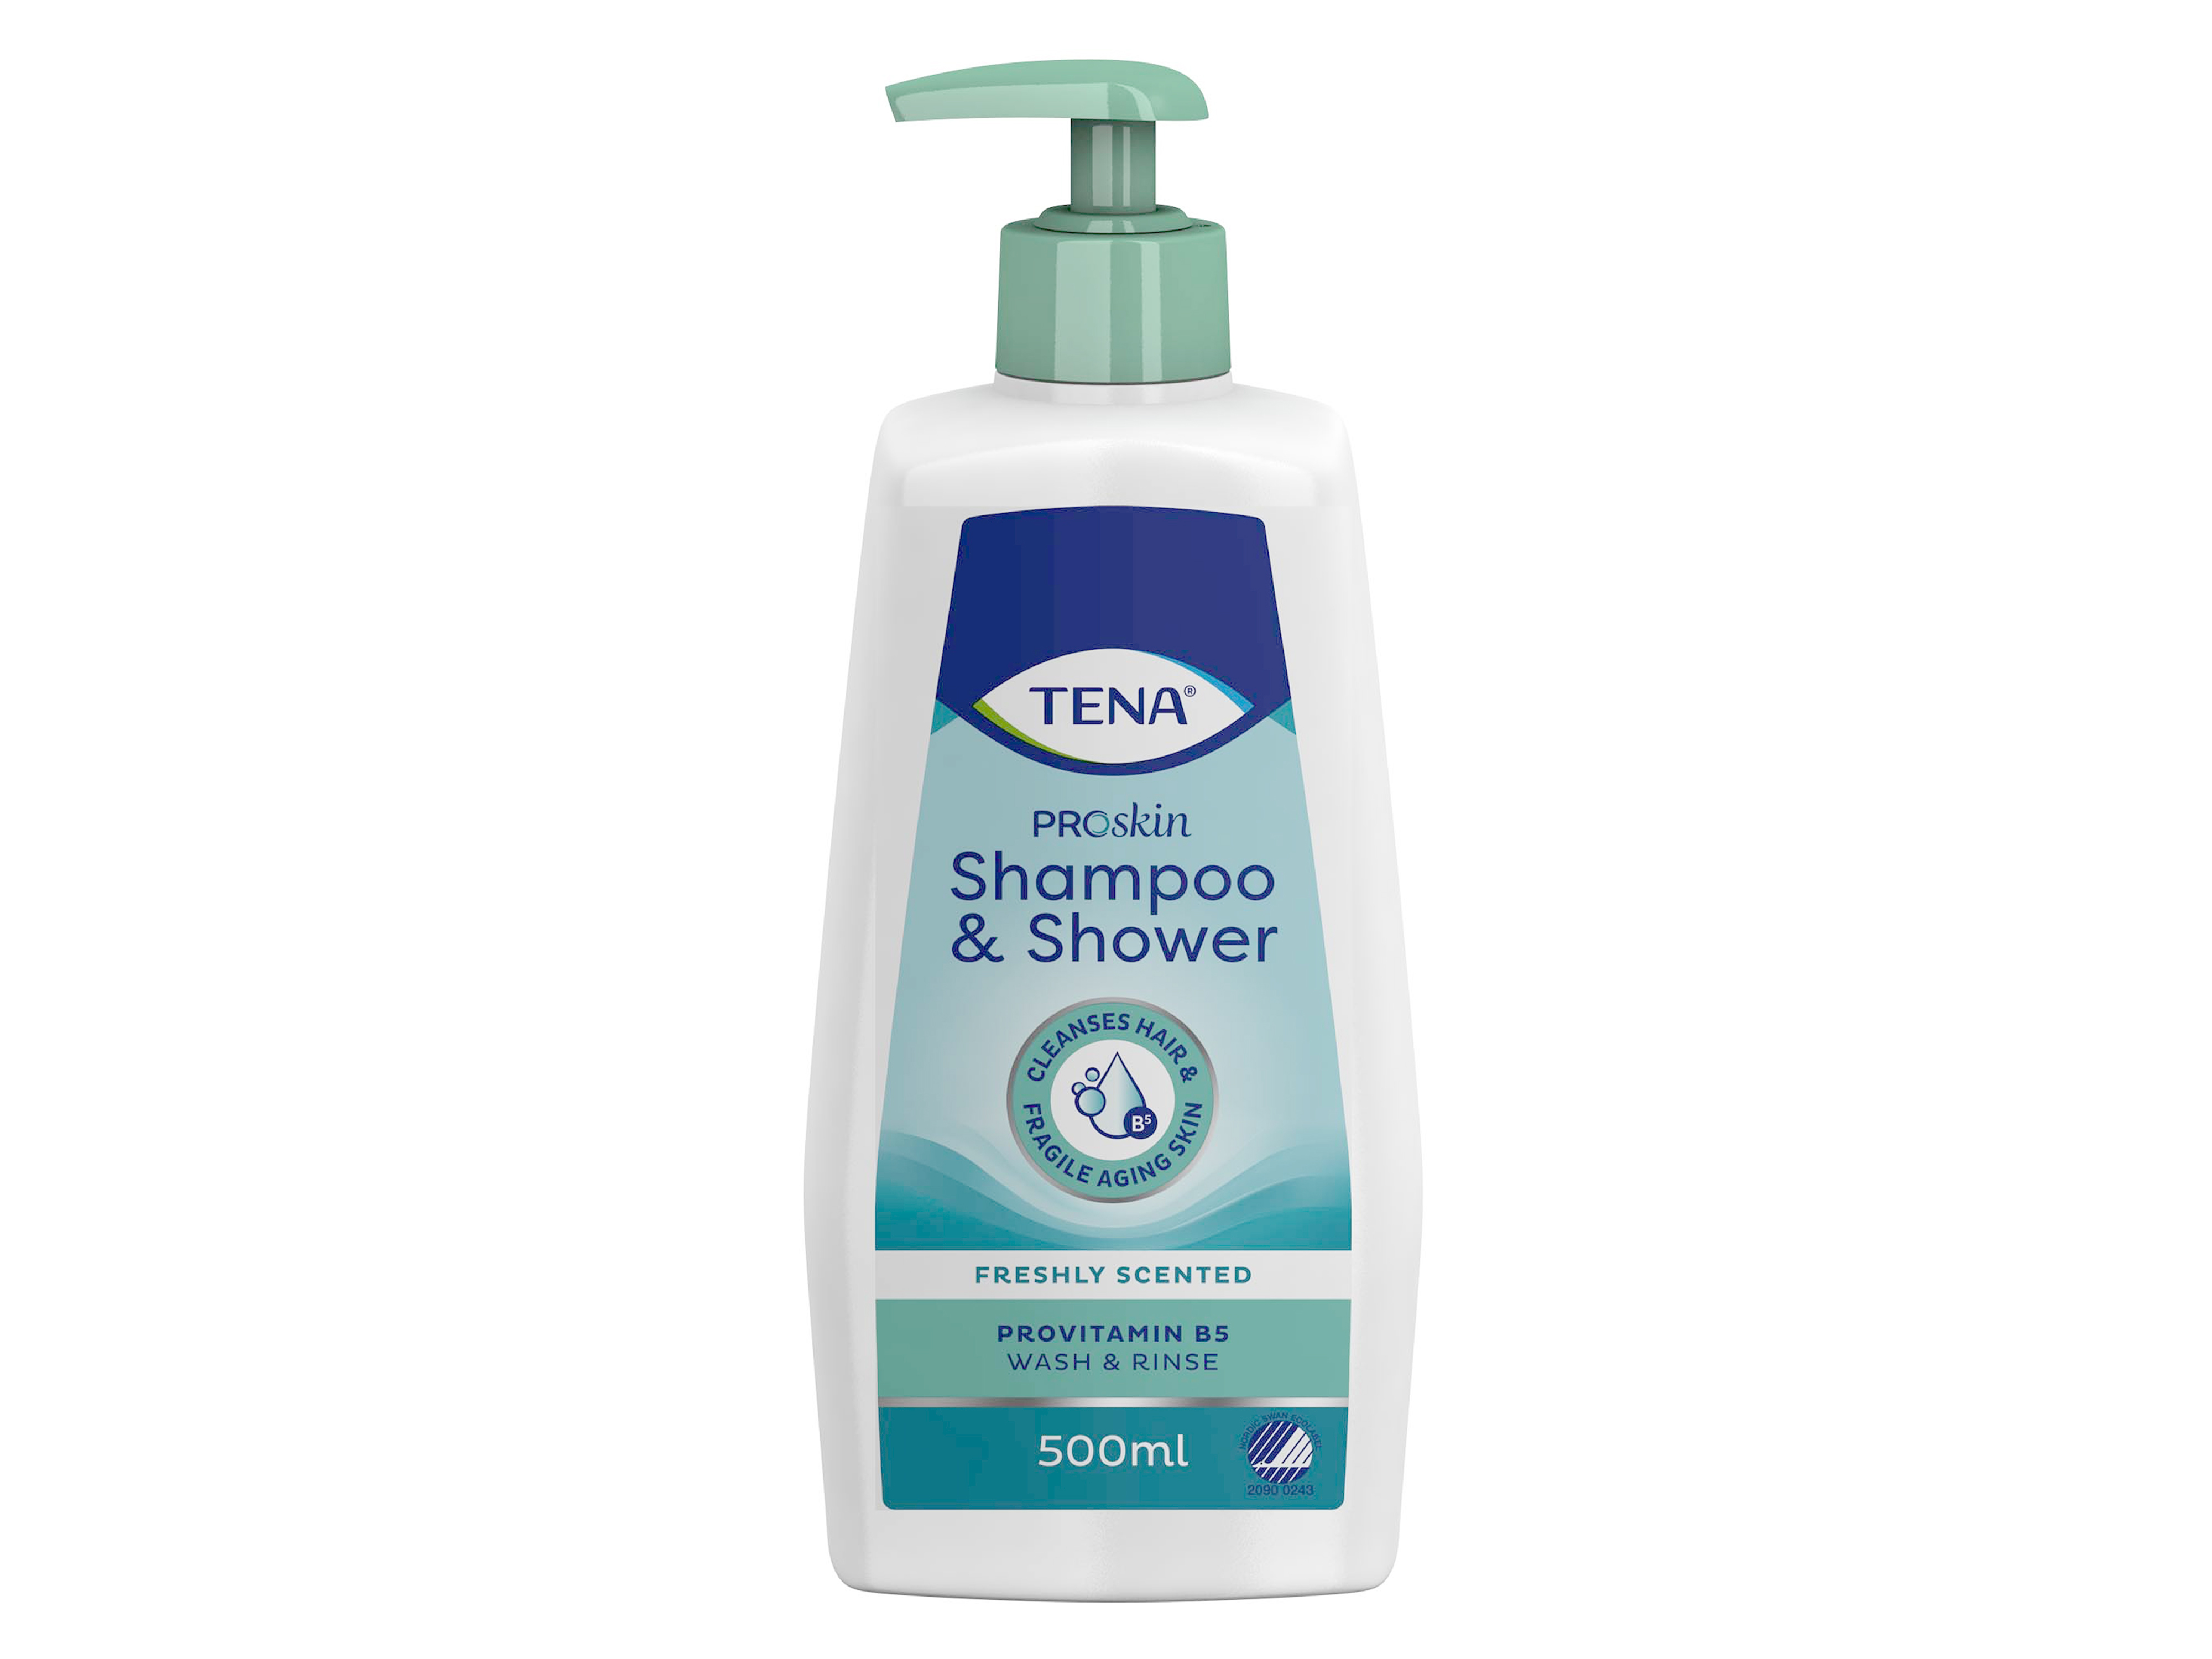 Tena Proskin Shampoo & Shower, 500 ml